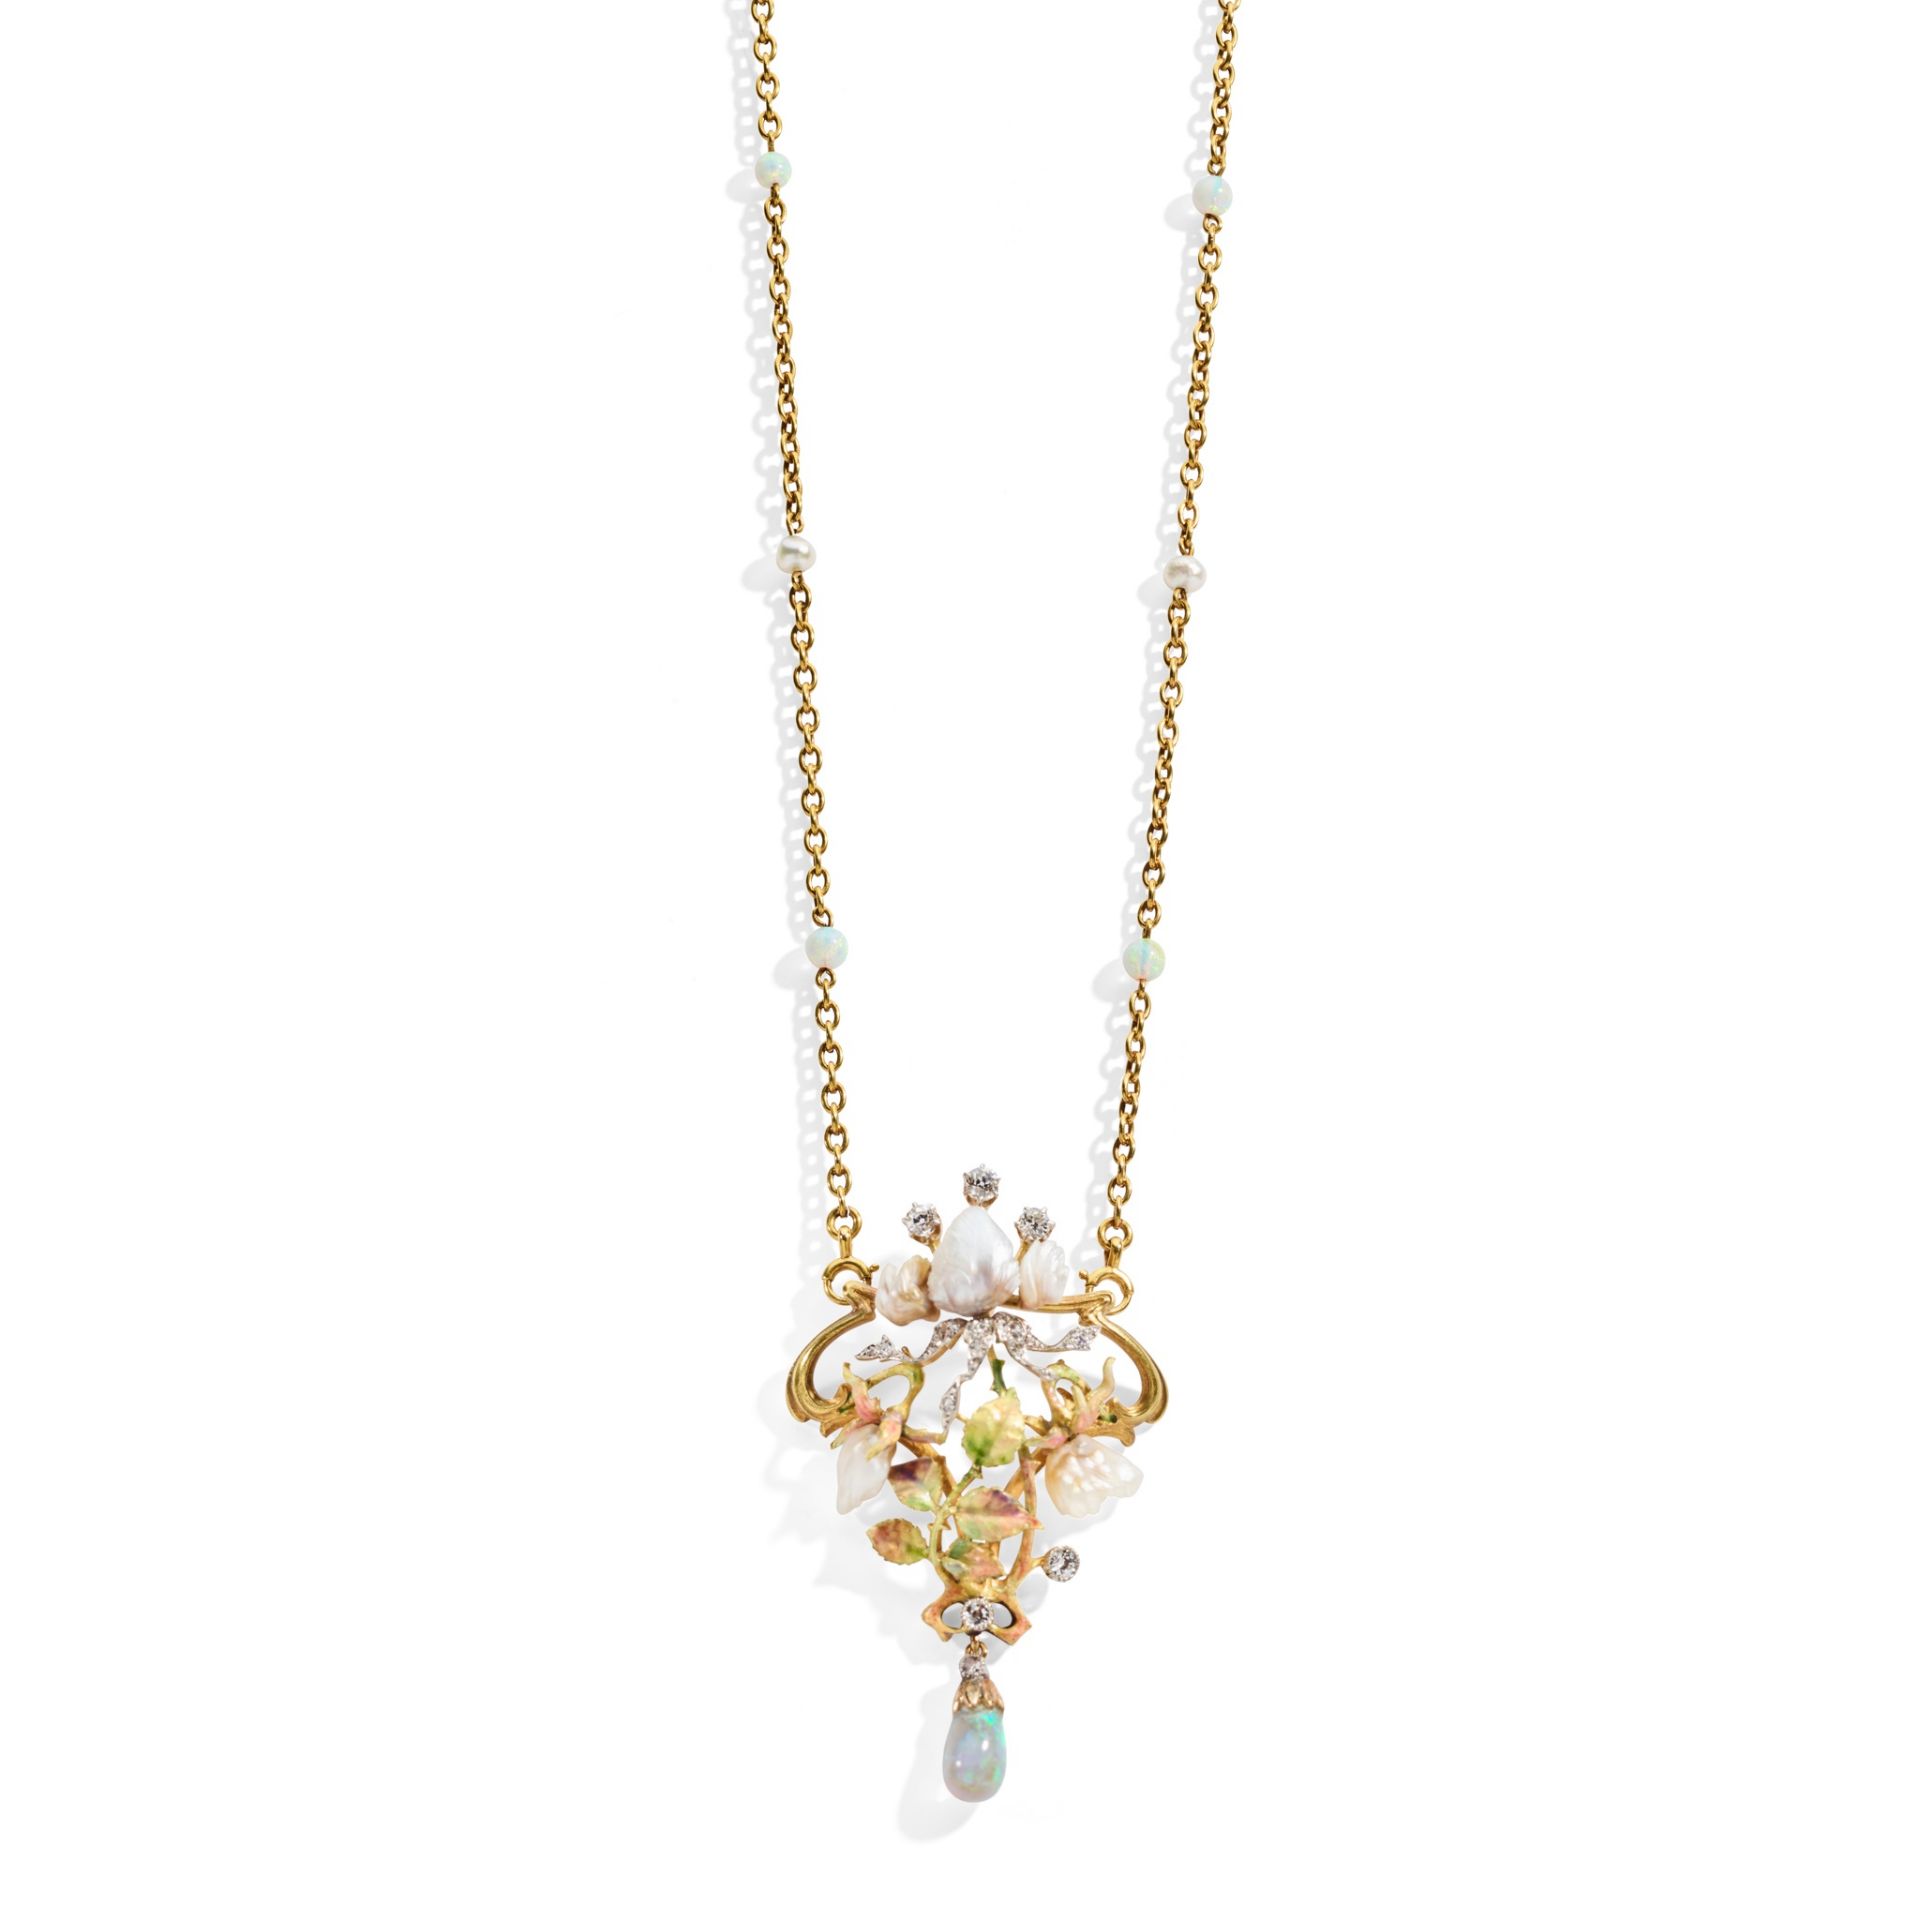 An Art Nouveau enamel, opal and diamond pendant necklace, circa 1900 - Image 2 of 3